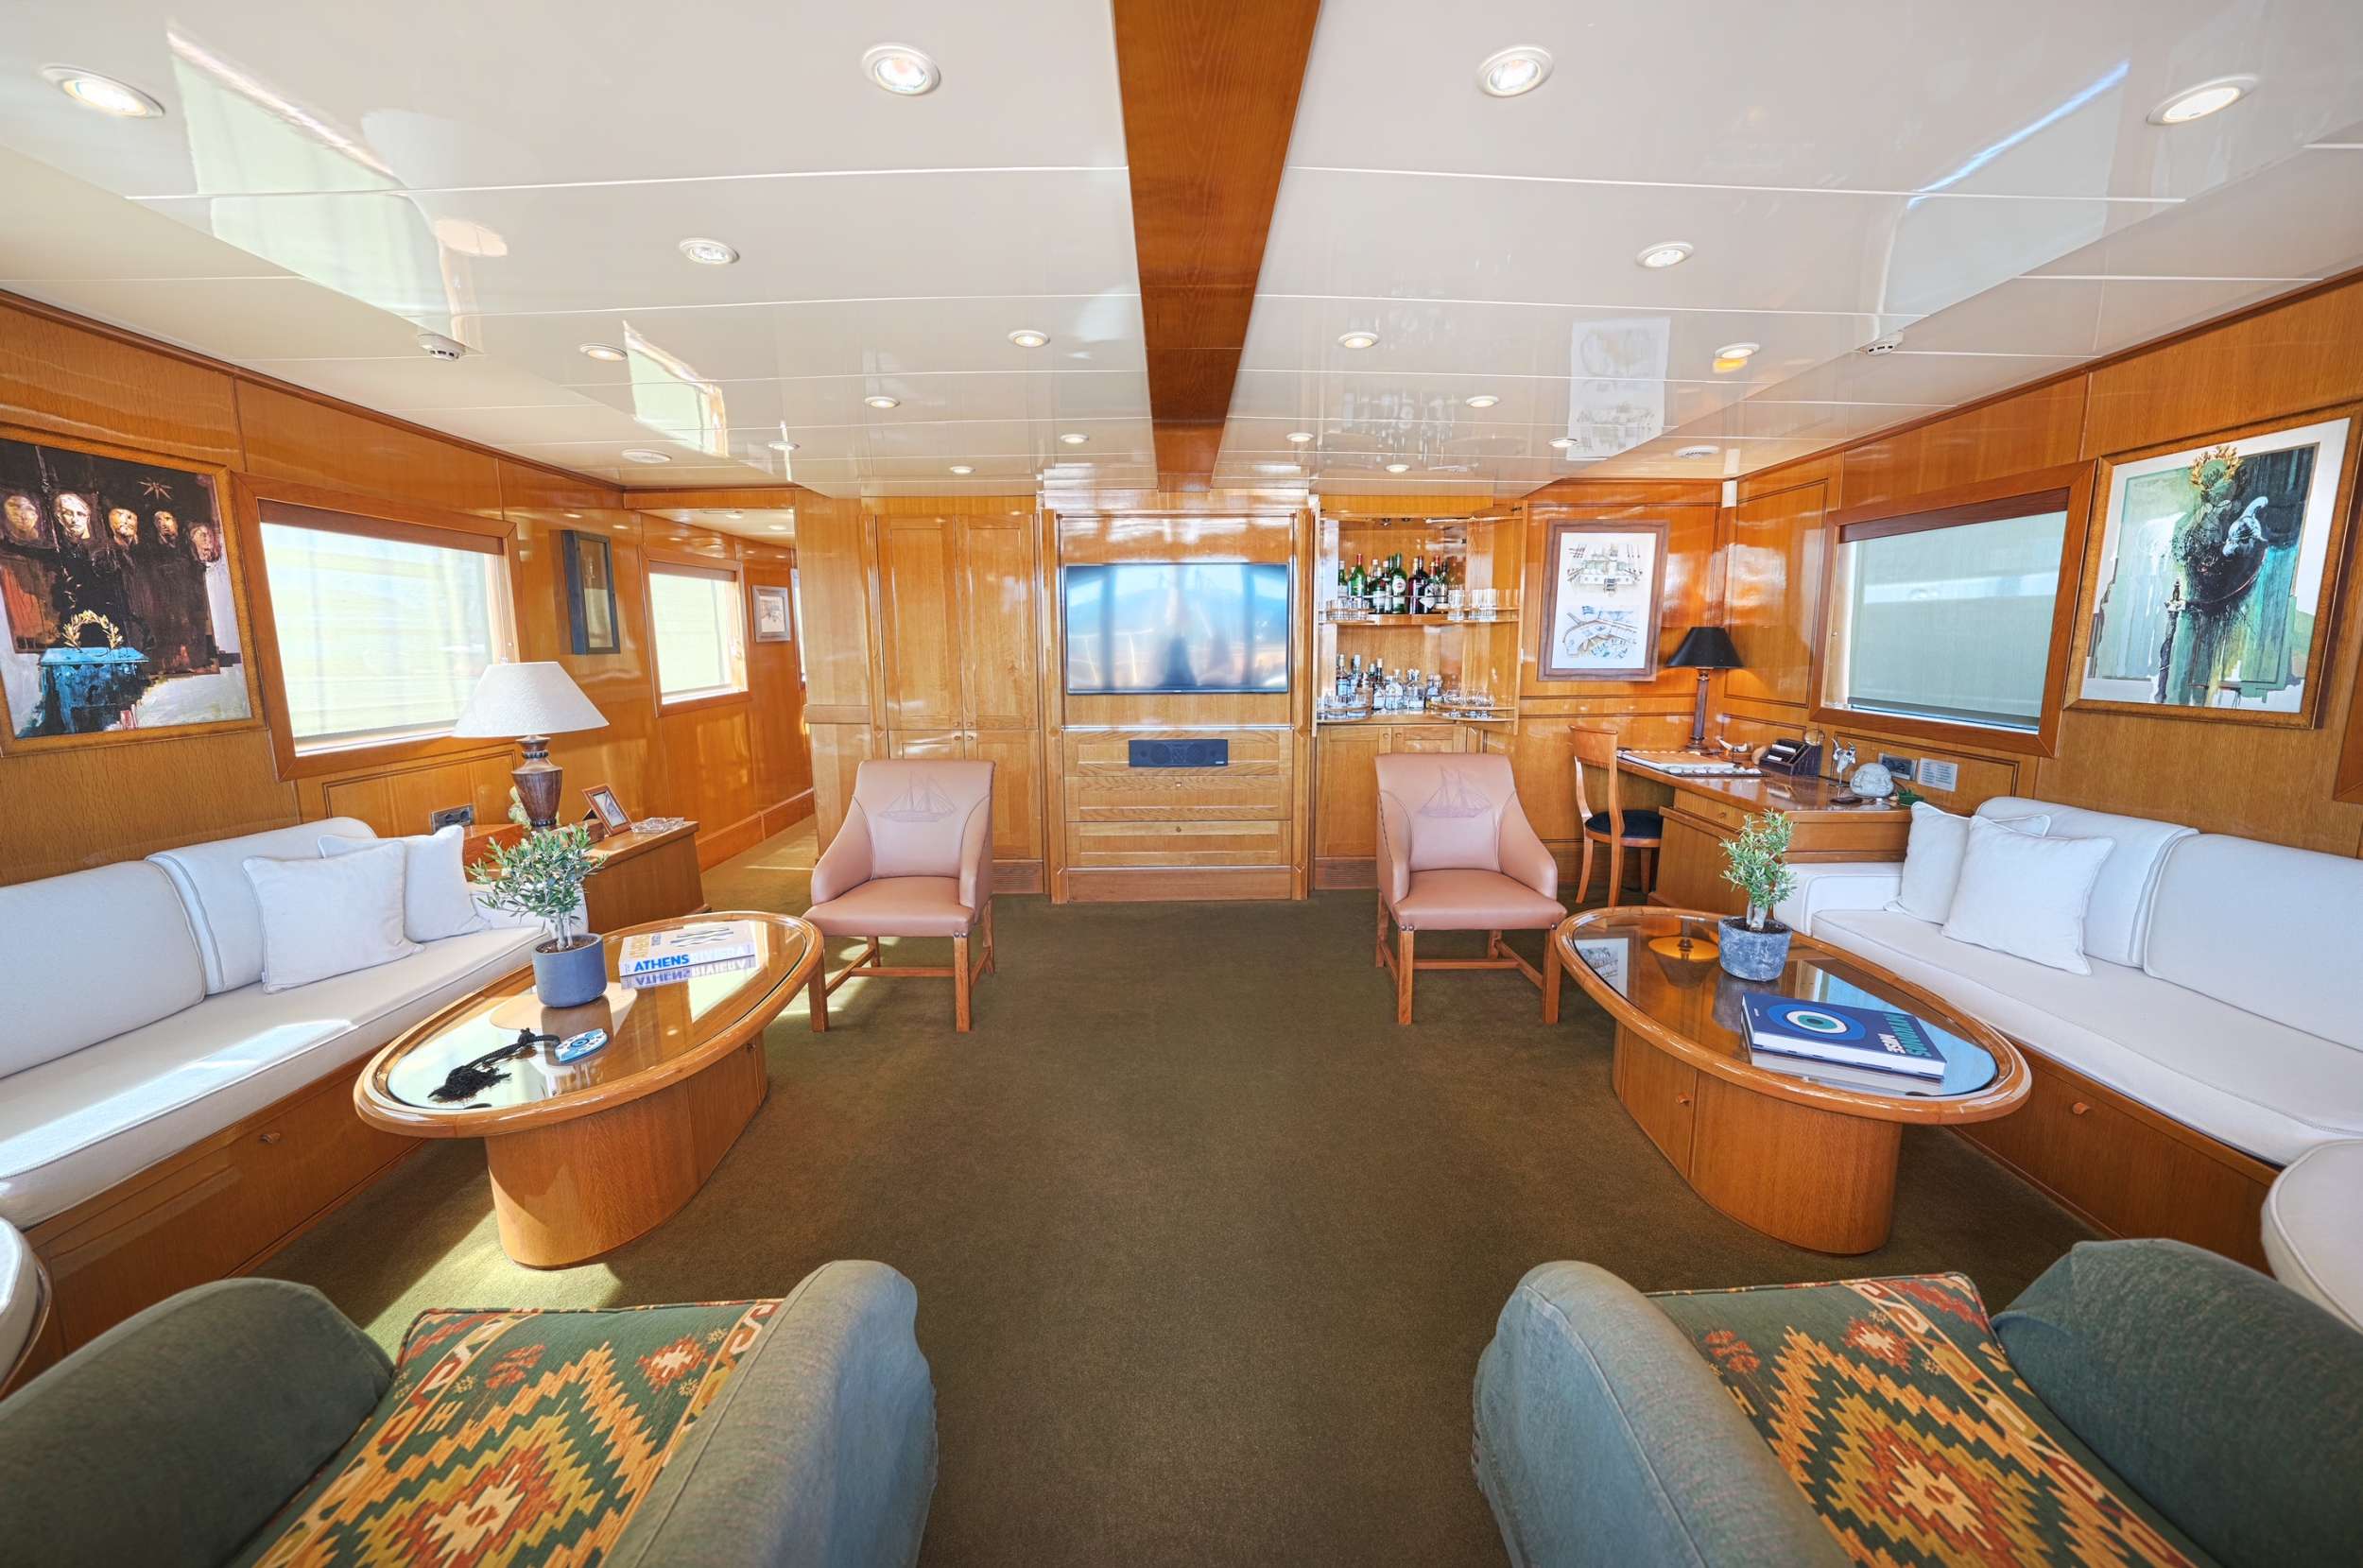 ARKTOS Yacht Charter - Salon area